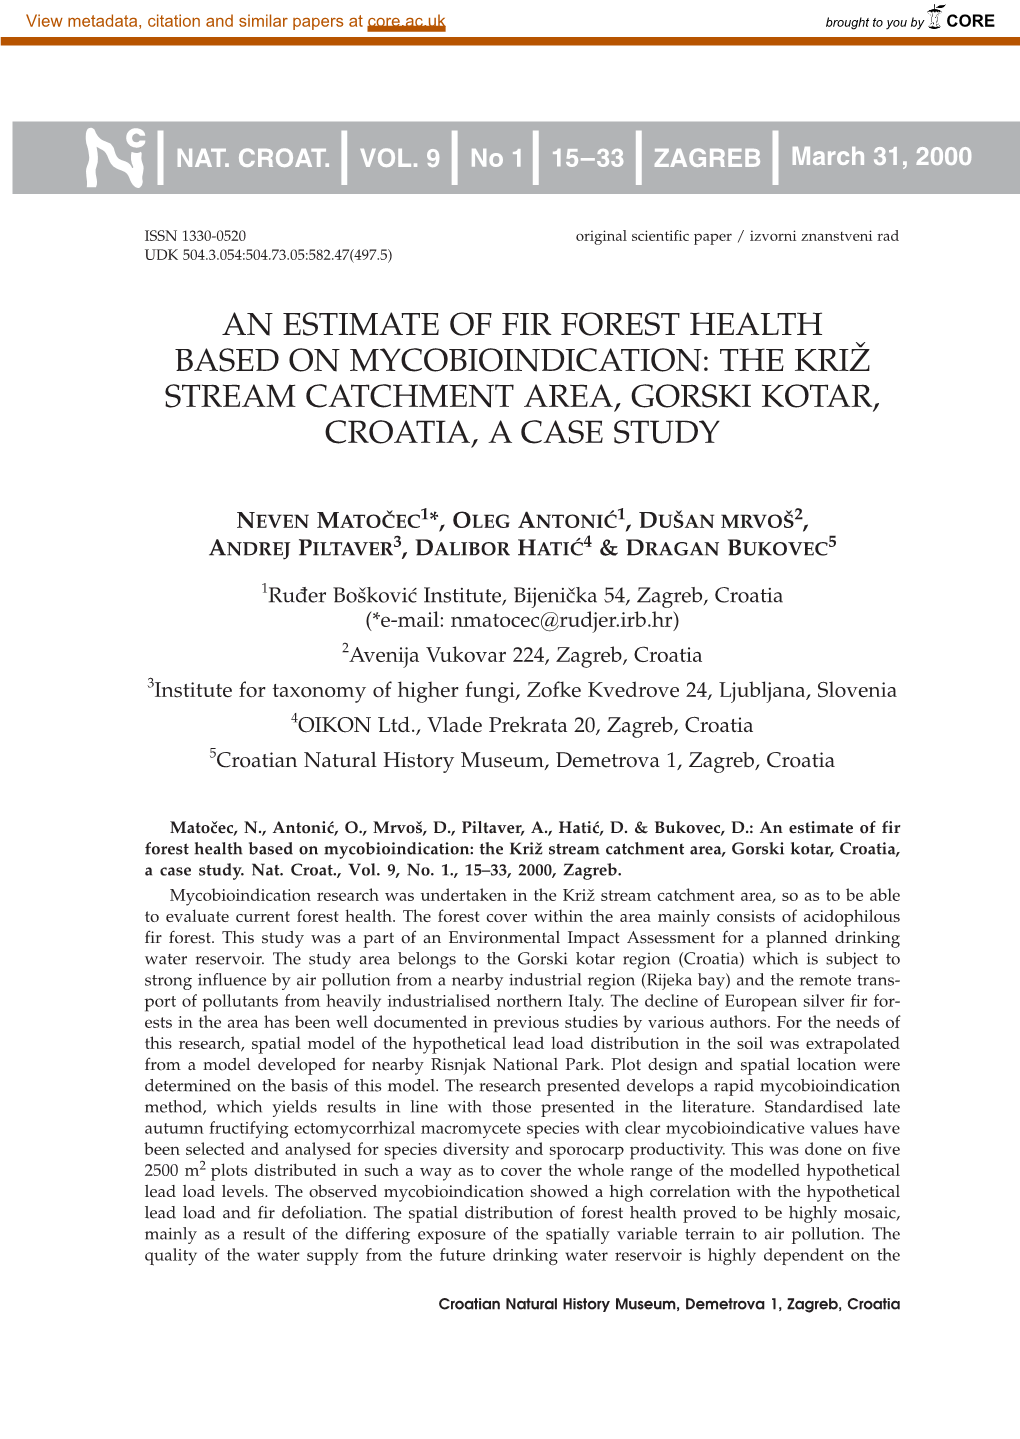 The Kri@ Stream Catchment Area, Gorski Kotar, Croatia, a Case Study